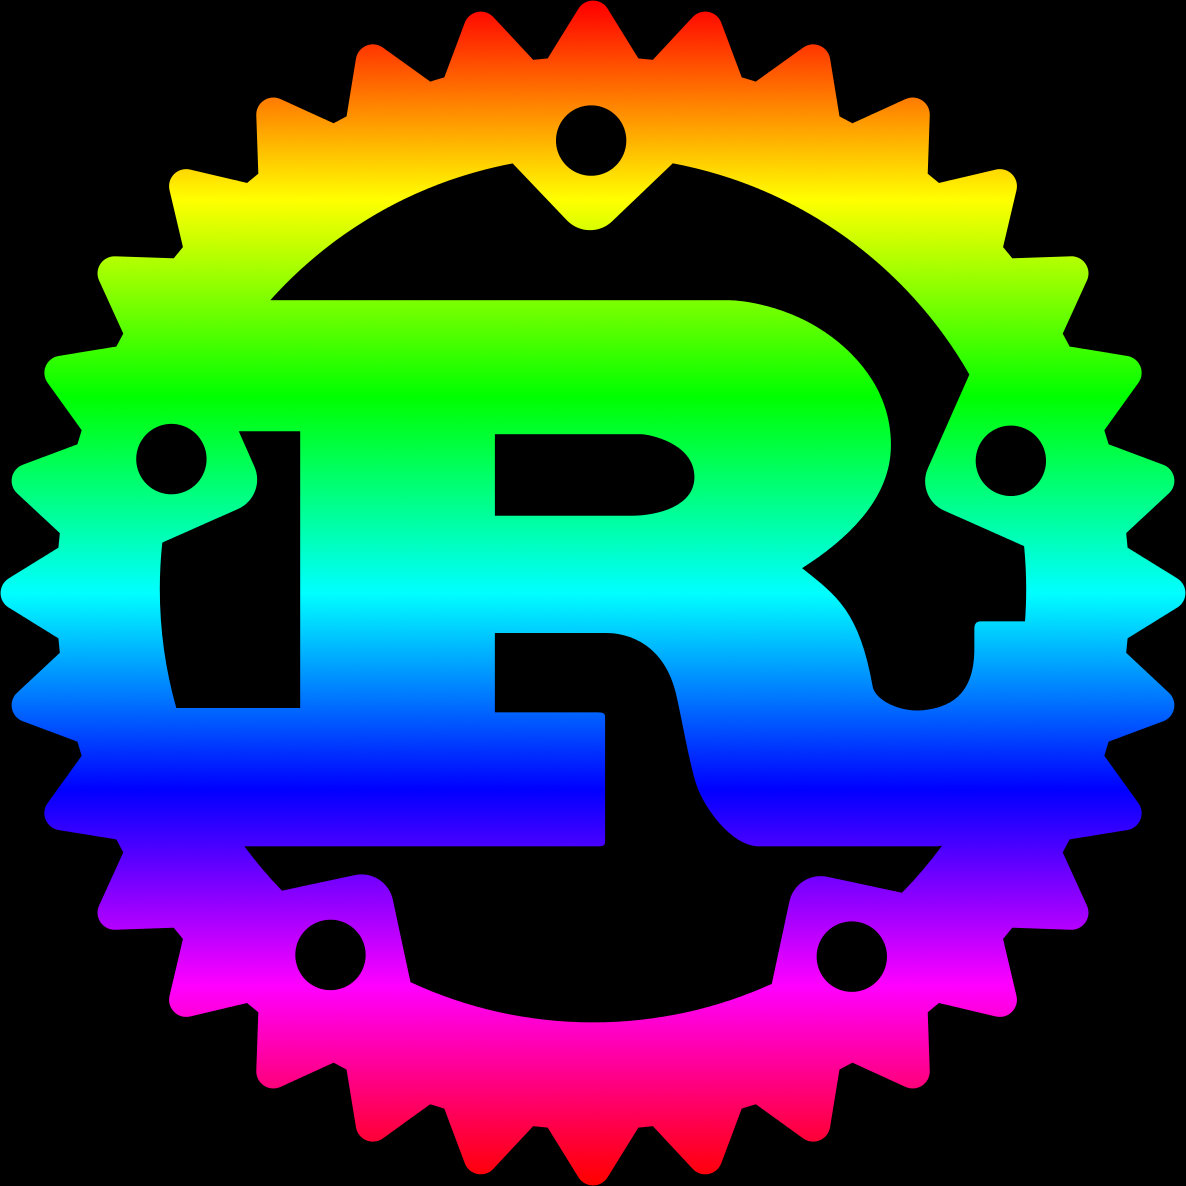 Rust logo with rainbow.